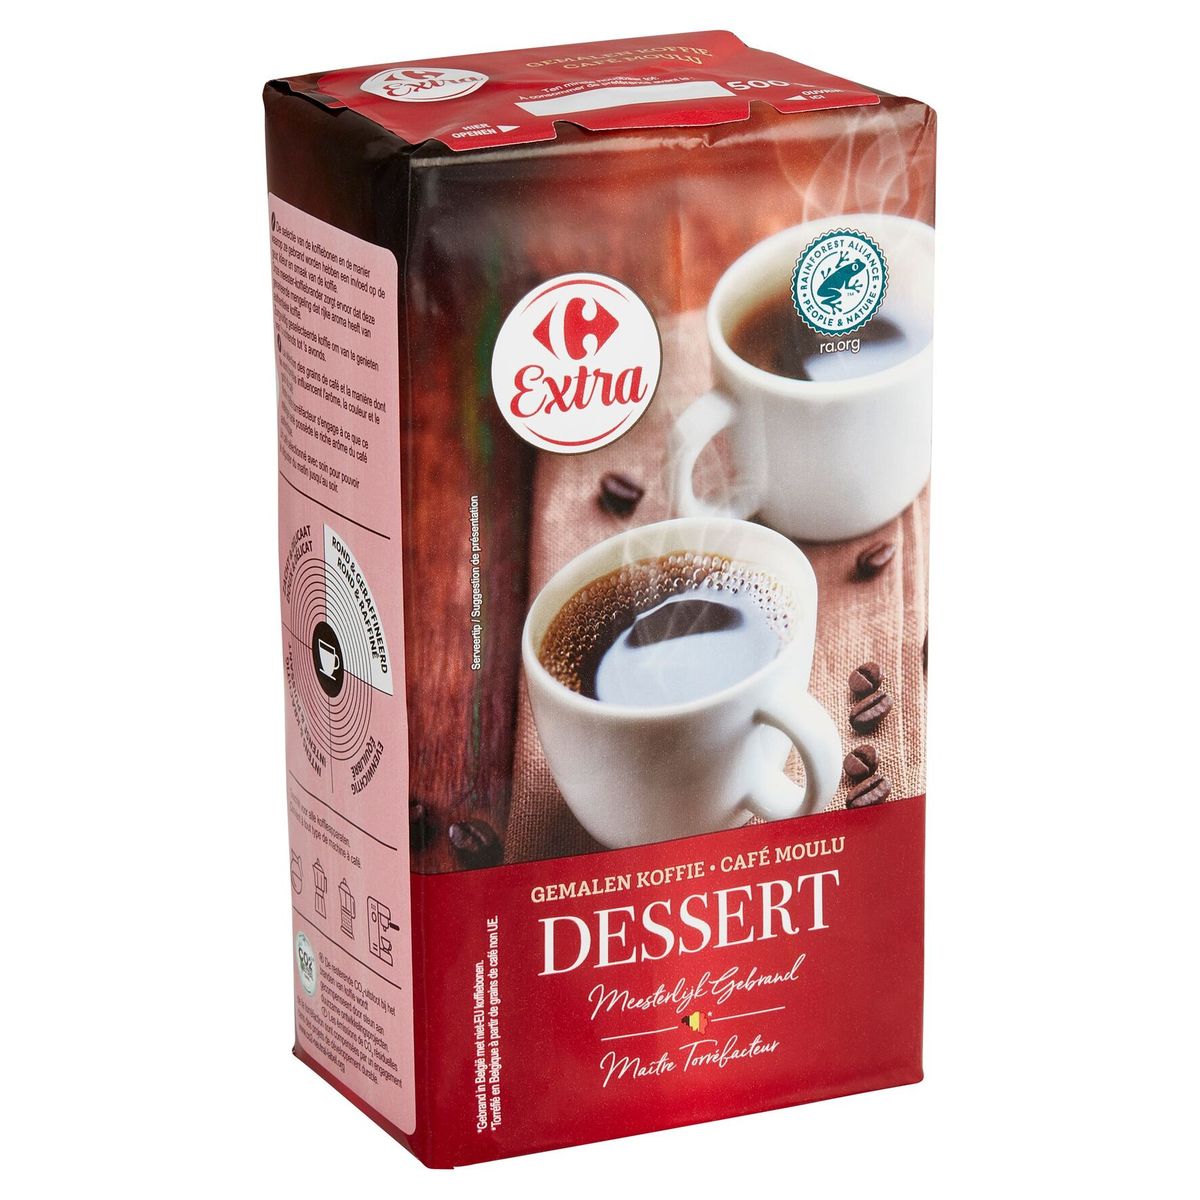 Carrefour Extra Gemalen Koffie Dessert 500 g